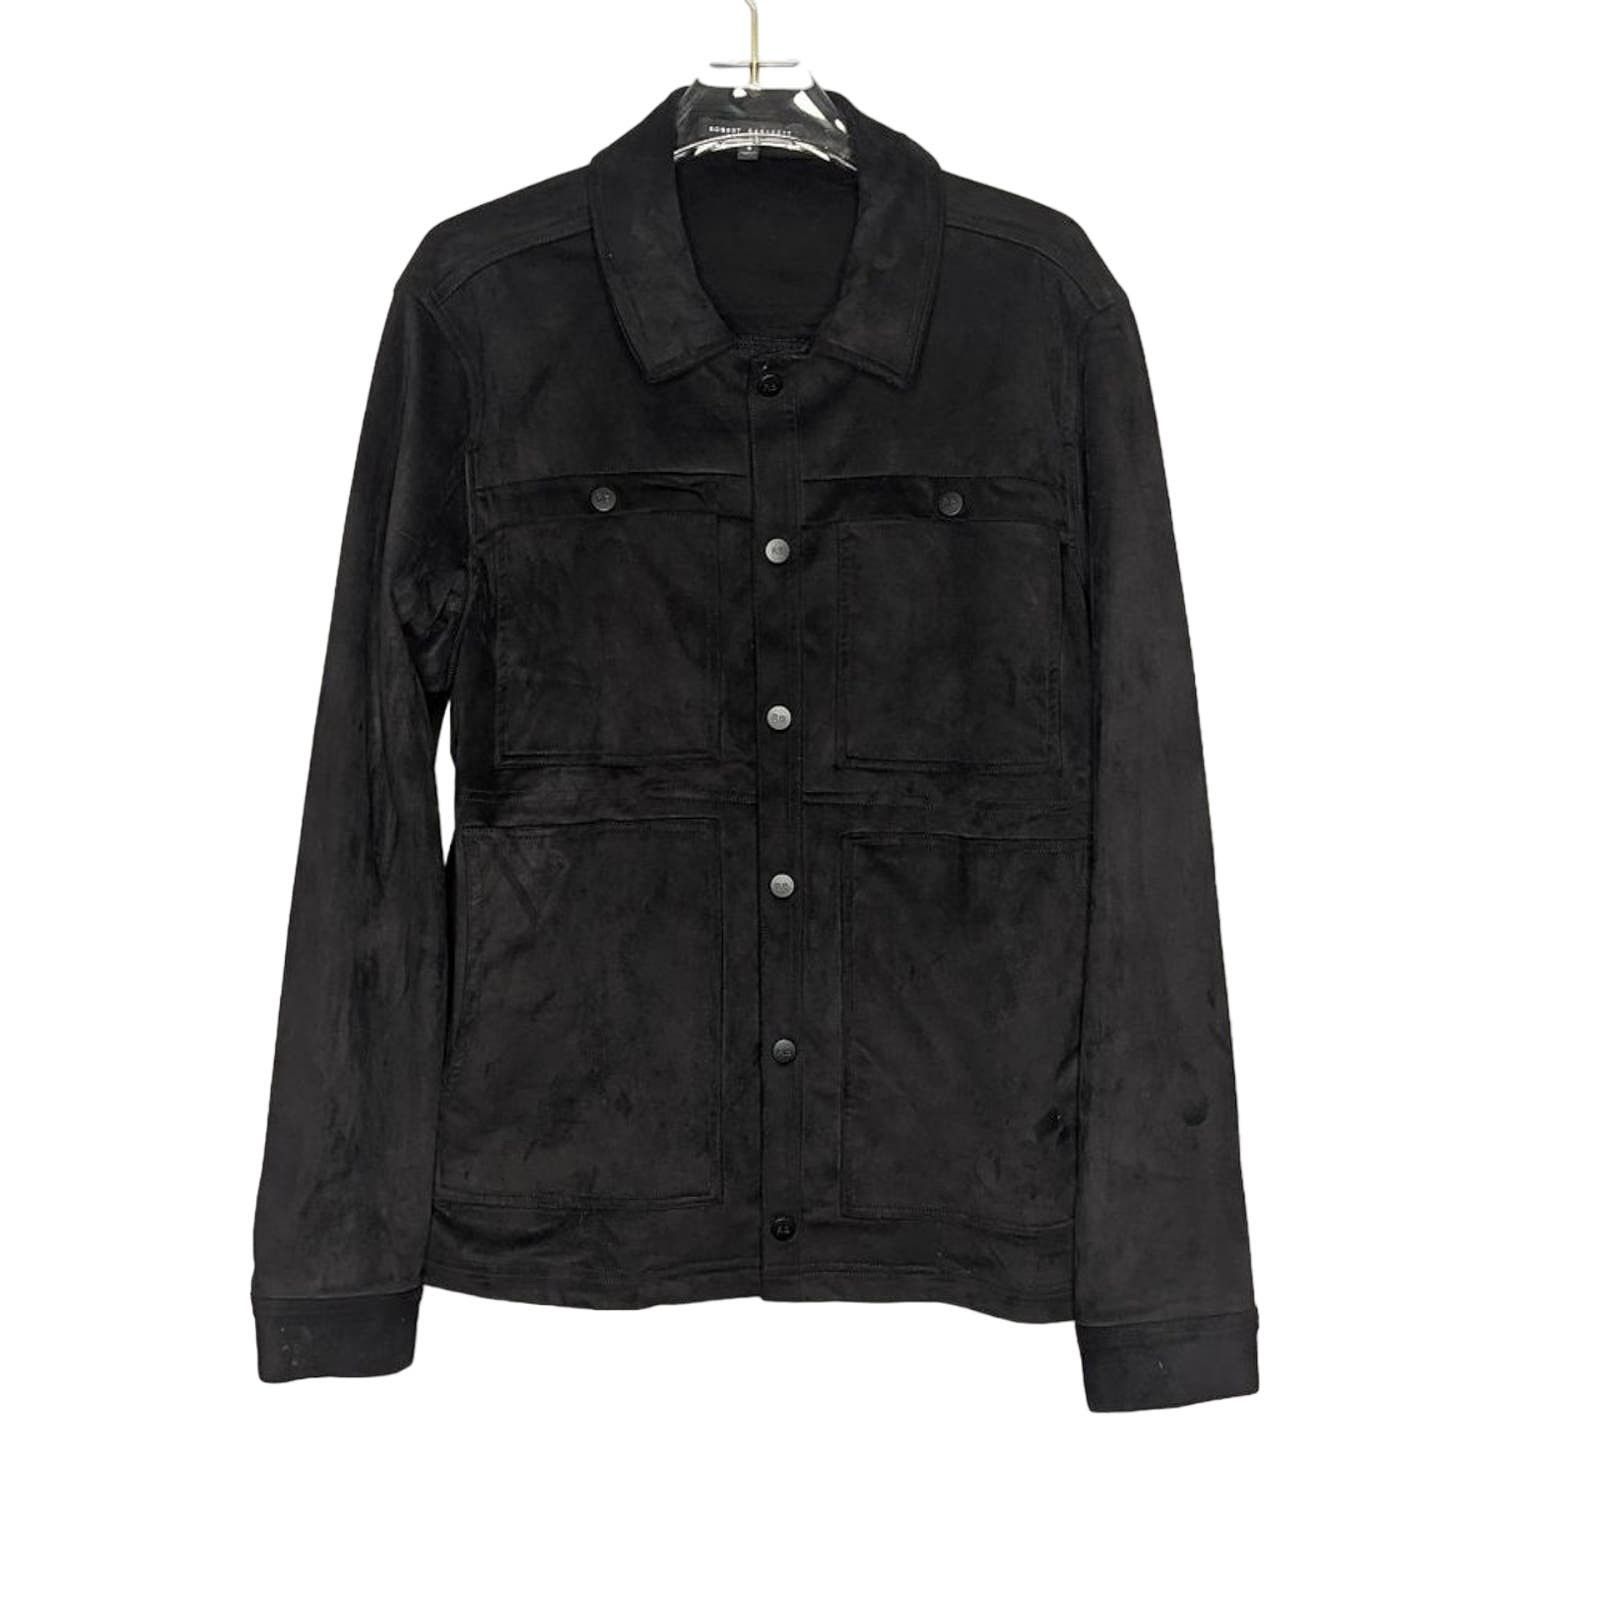 Robert Barakett Robert Barakett Black Renoir Denim Style Jacket Faux Suede S Size US S / EU 44-46 / 1 - 1 Preview